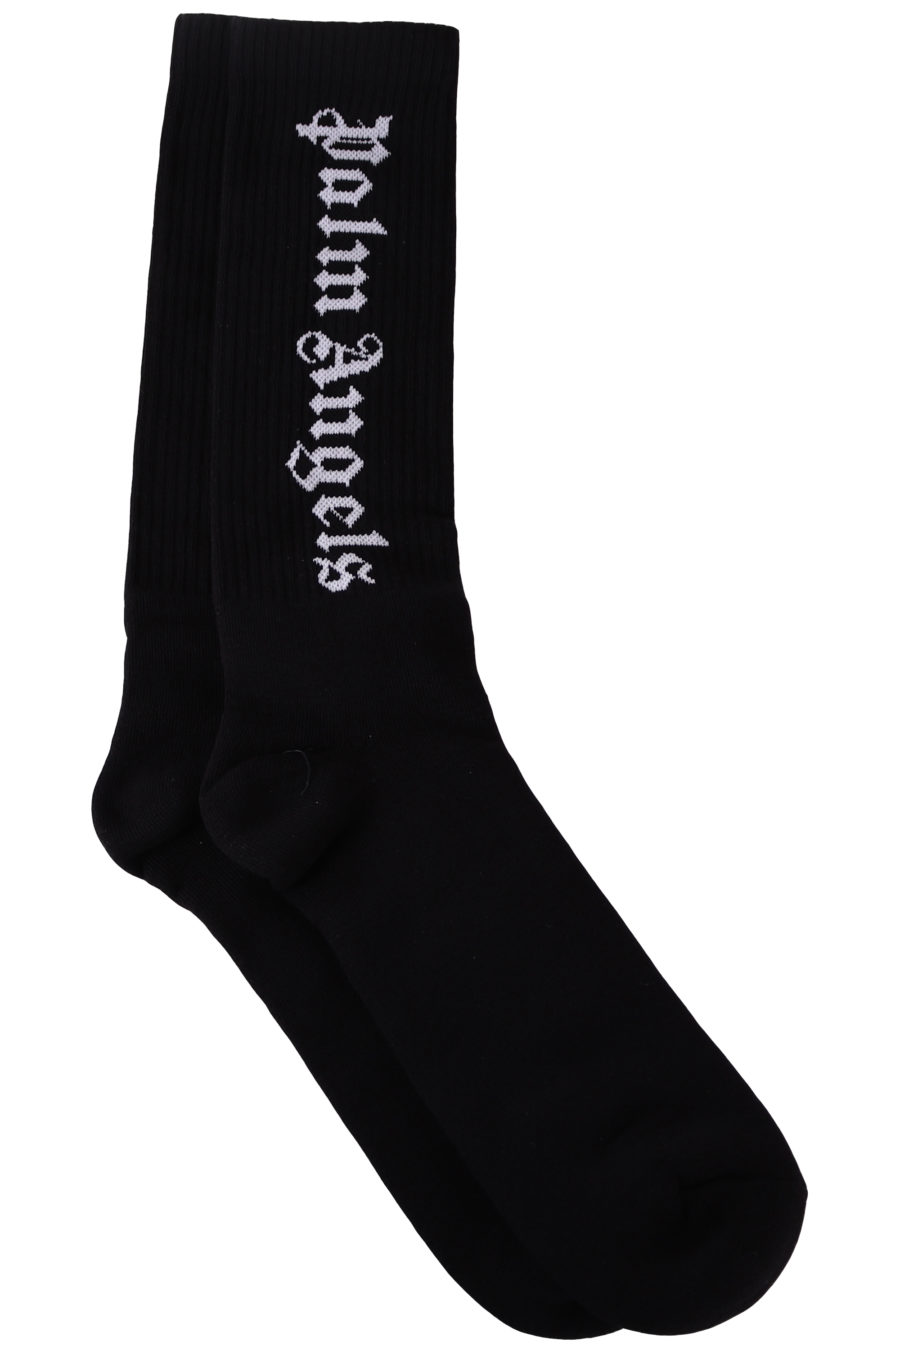 Calcetines negros con logo blanco vertical - IMG 2398